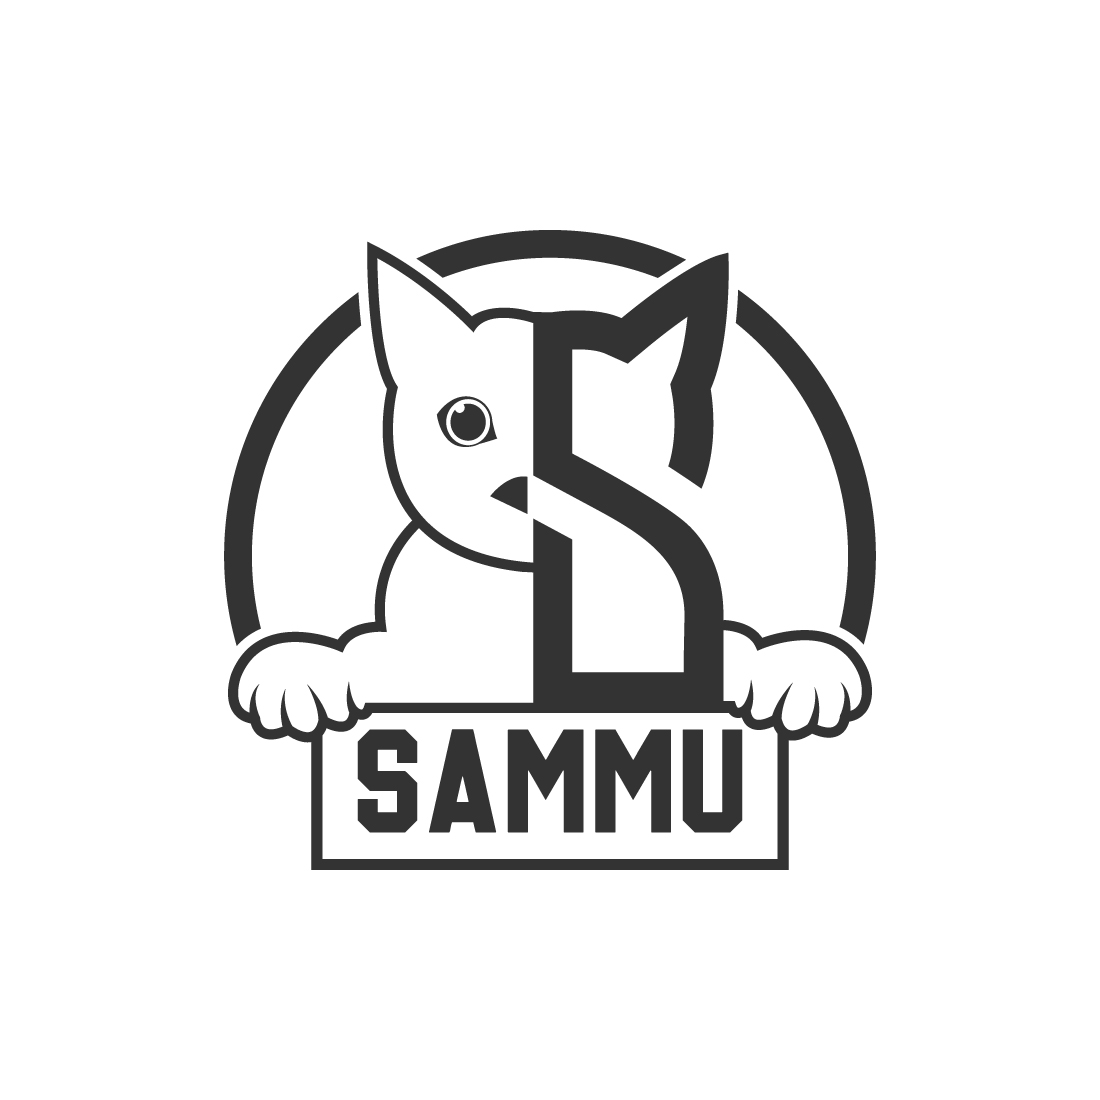 Sammu S Cat logo design preview image.